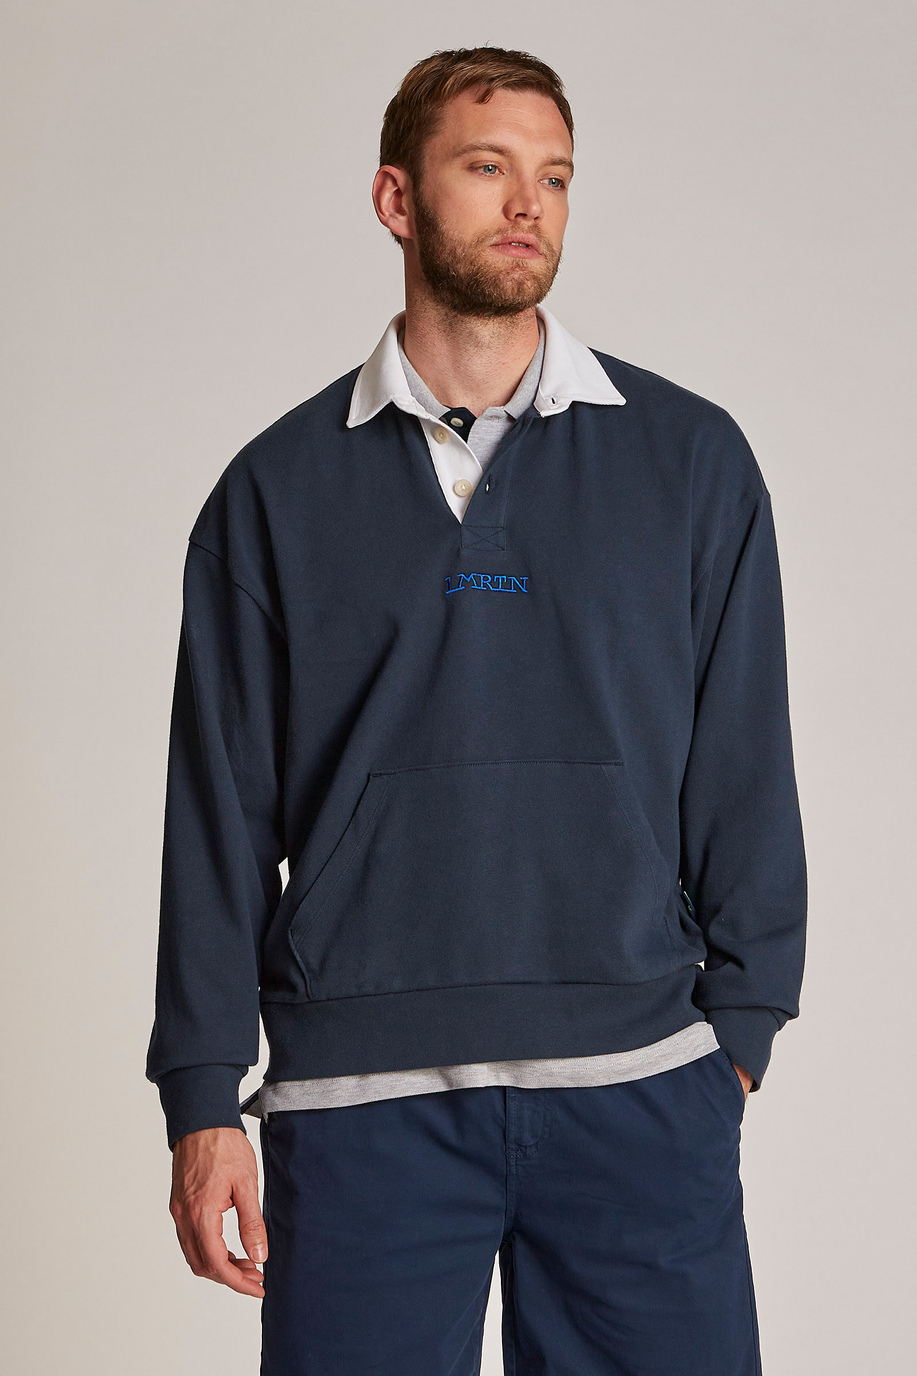 Men's oversized 100% cotton sweatshirt featuring a contrasting collar - Inspiration | La Martina - Official Online Shop